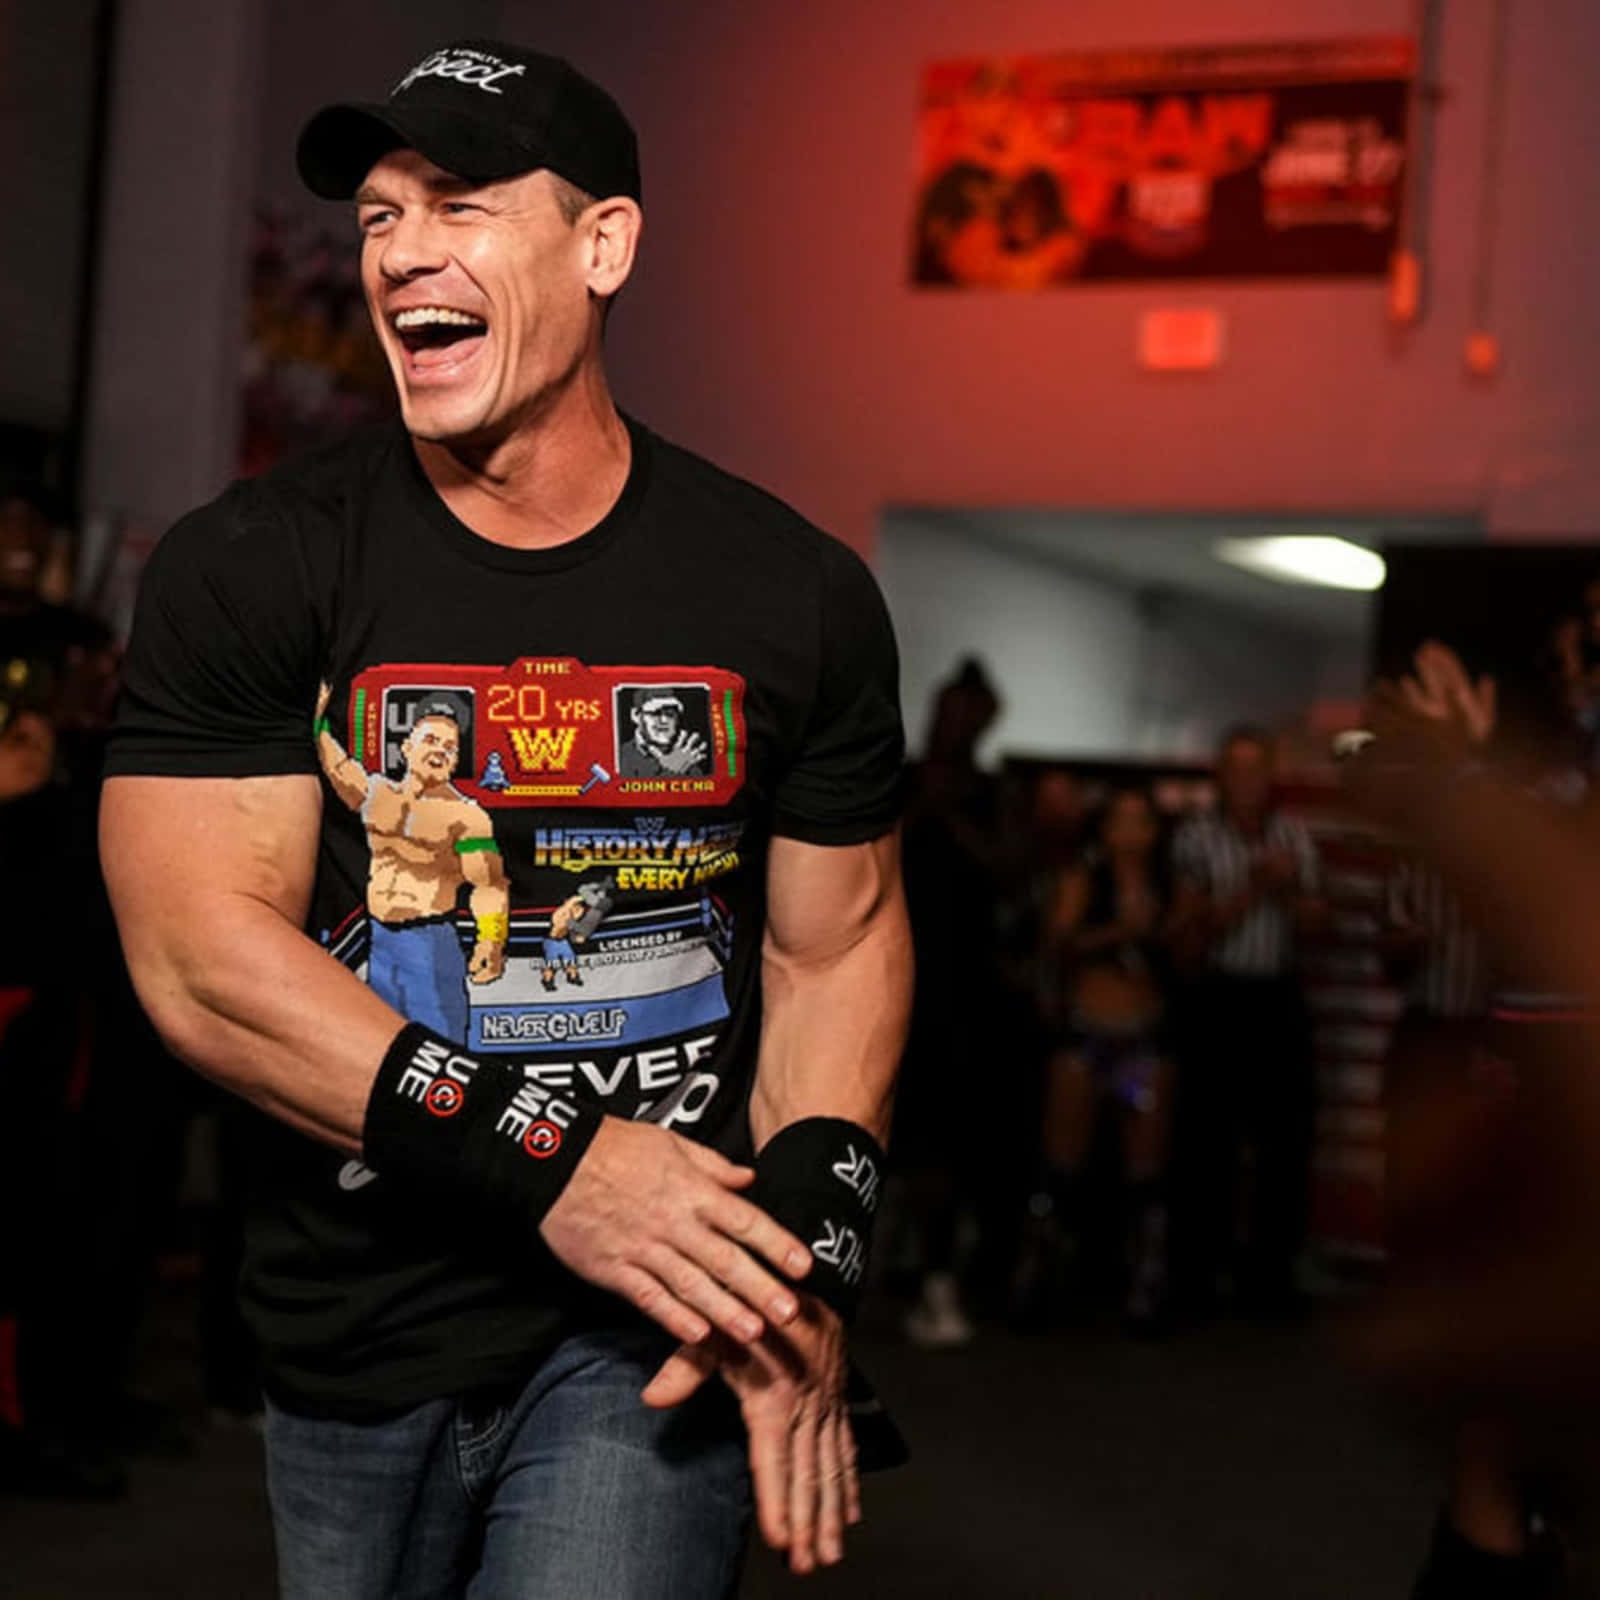 John Cena posing in a powerful stance